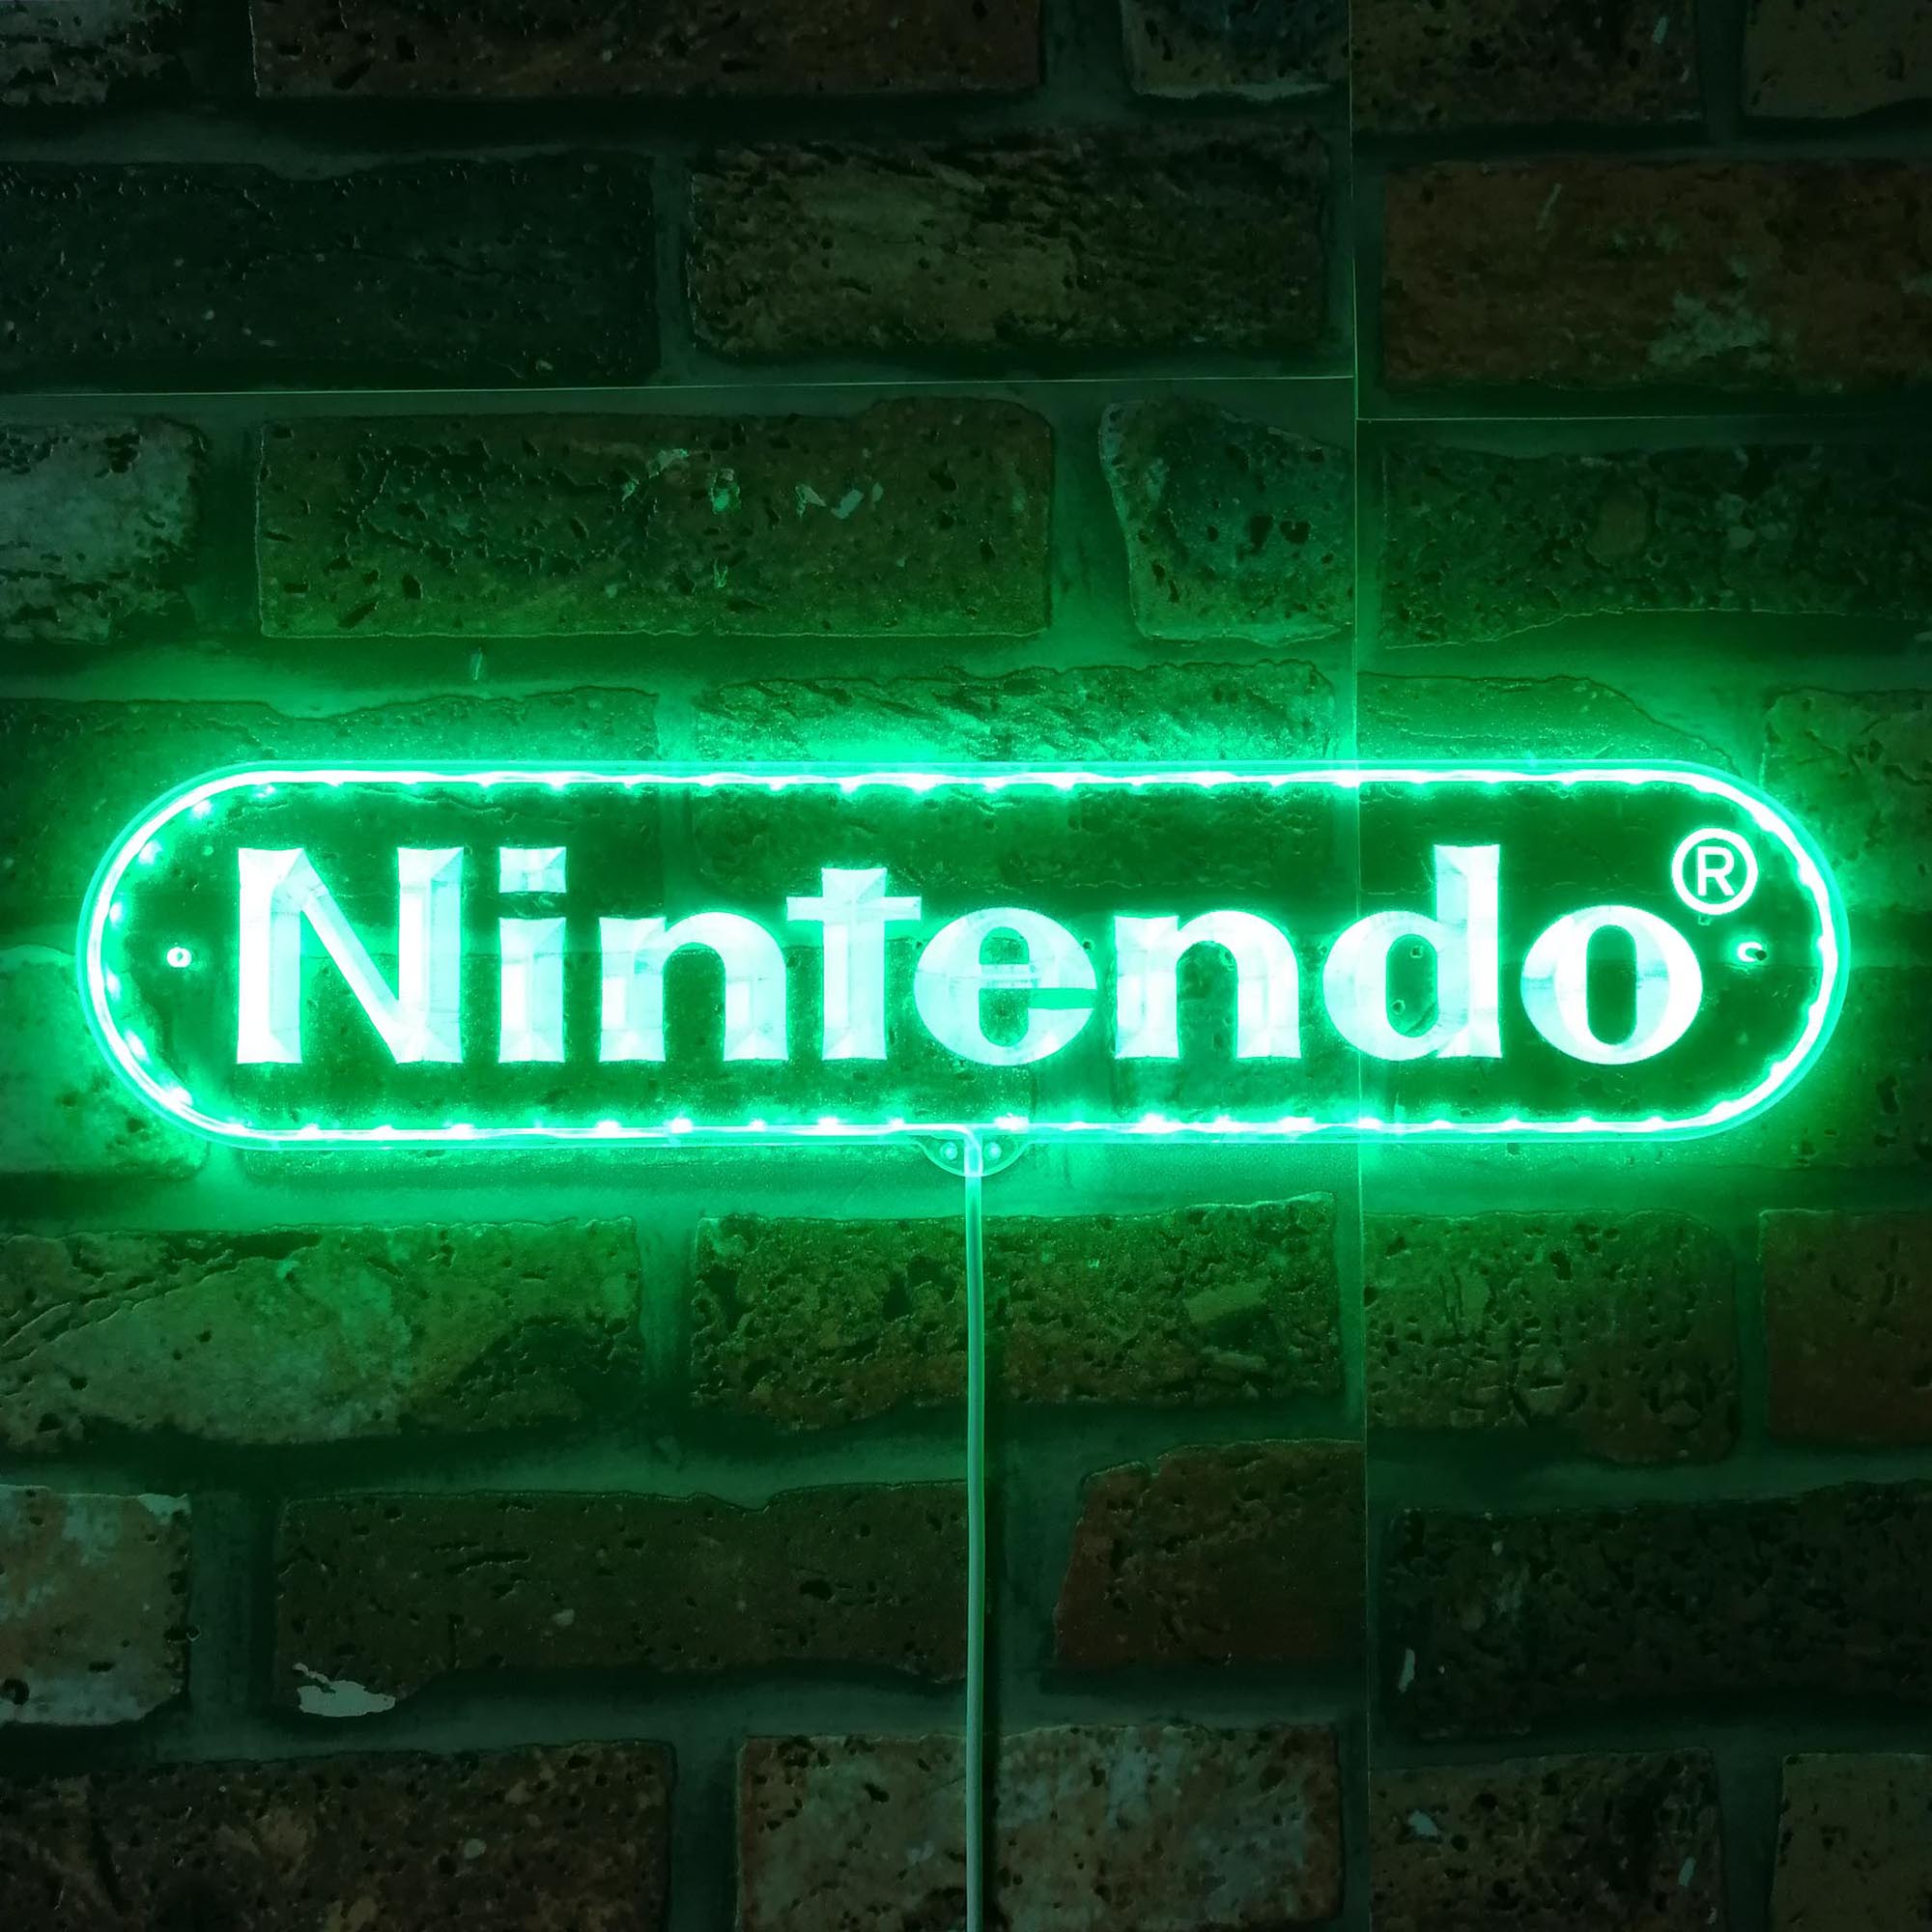 Nintendo Game Room Dynamic RGB Edge Lit LED Sign